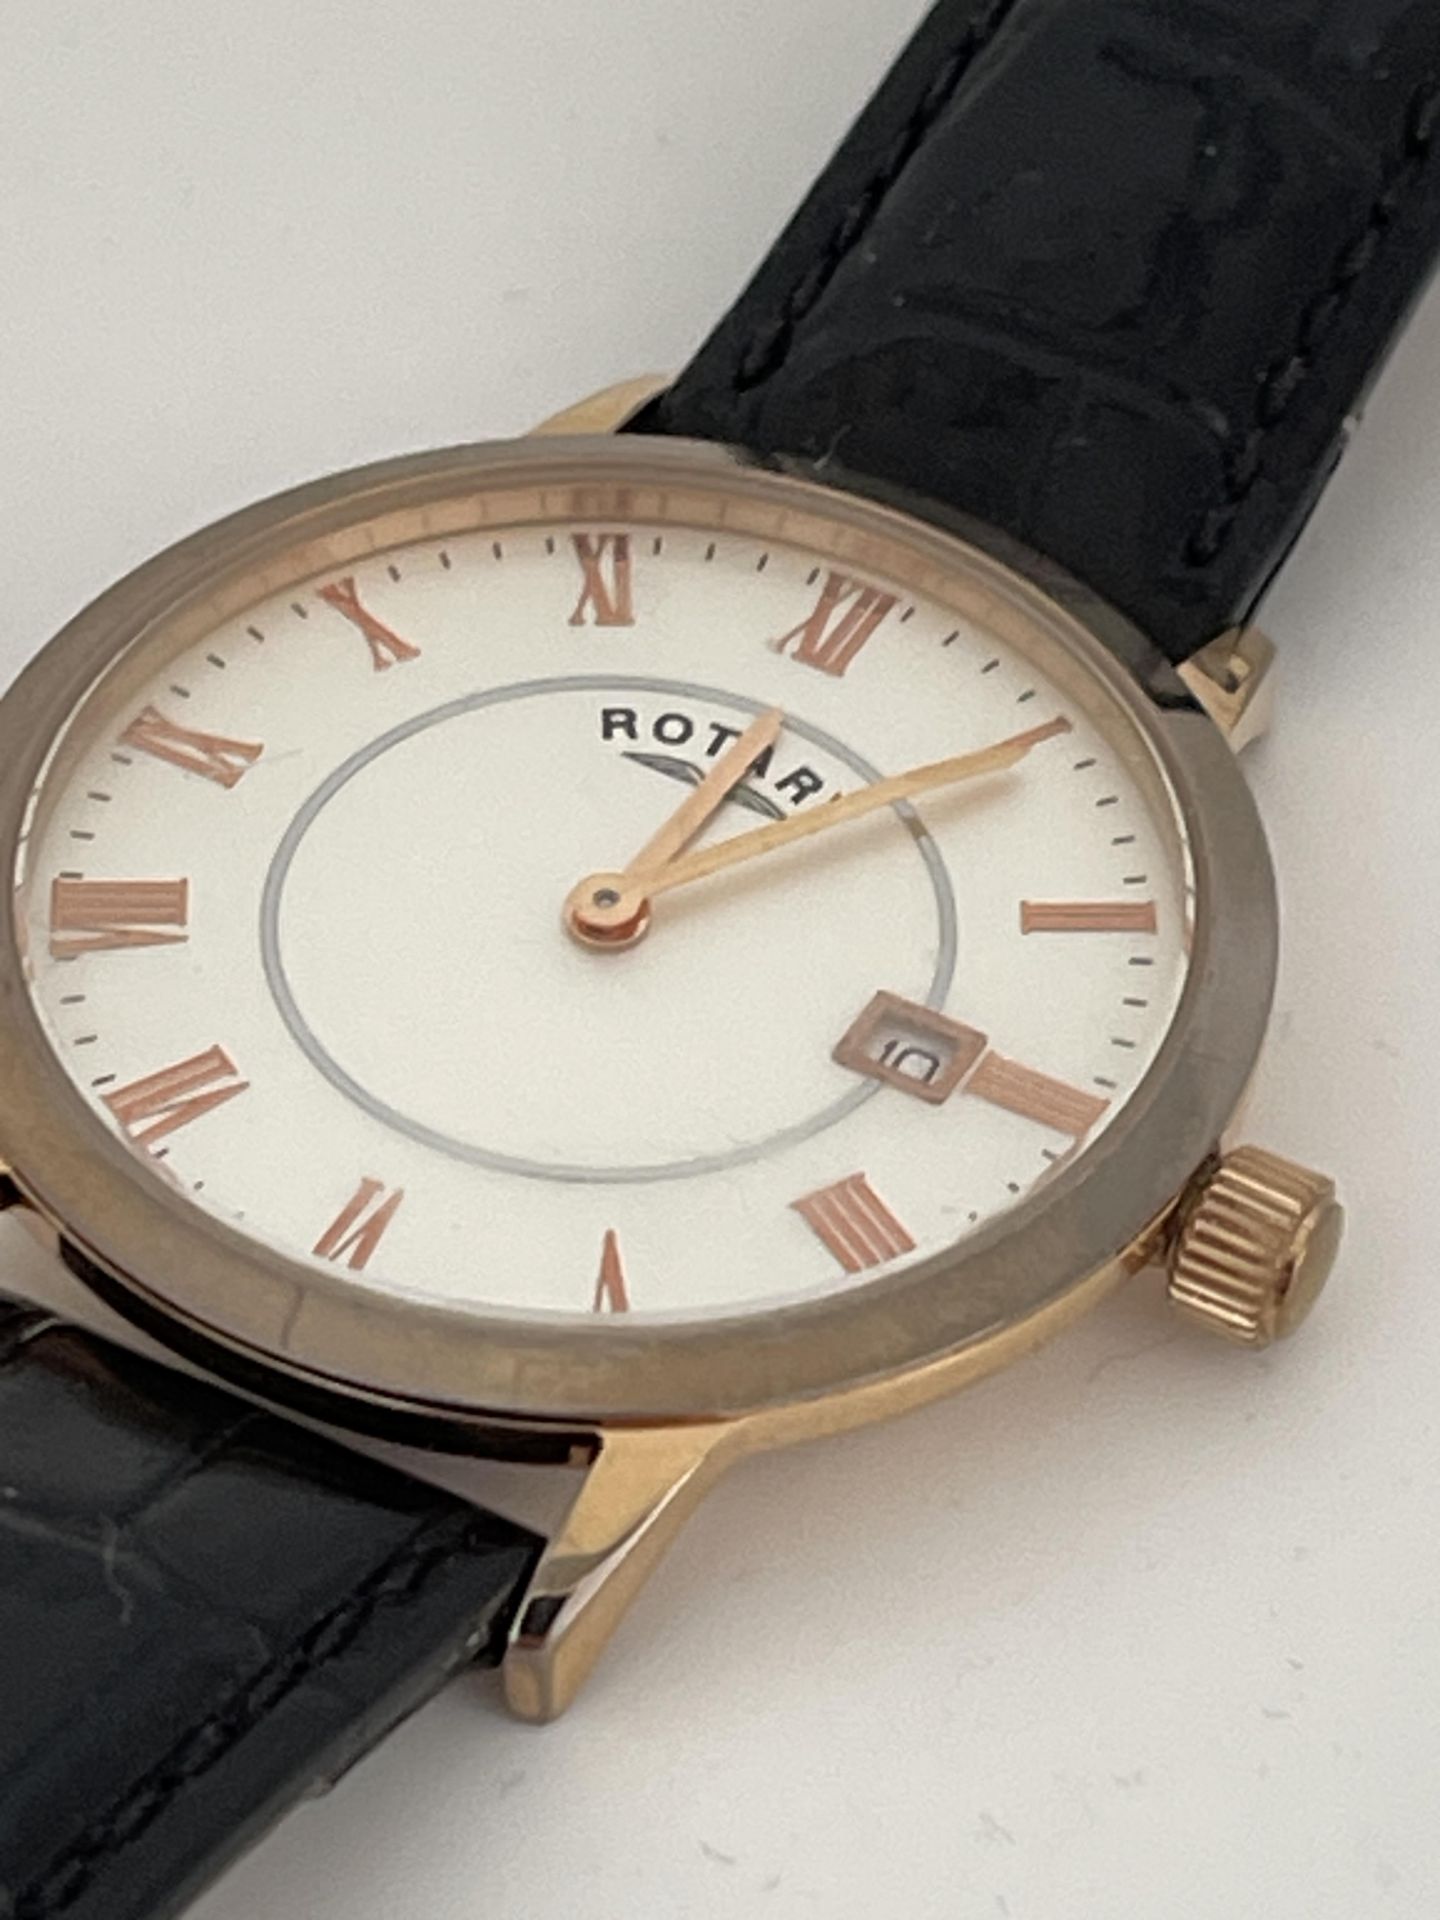 Rotary men's slim quartz watch - Image 7 of 9